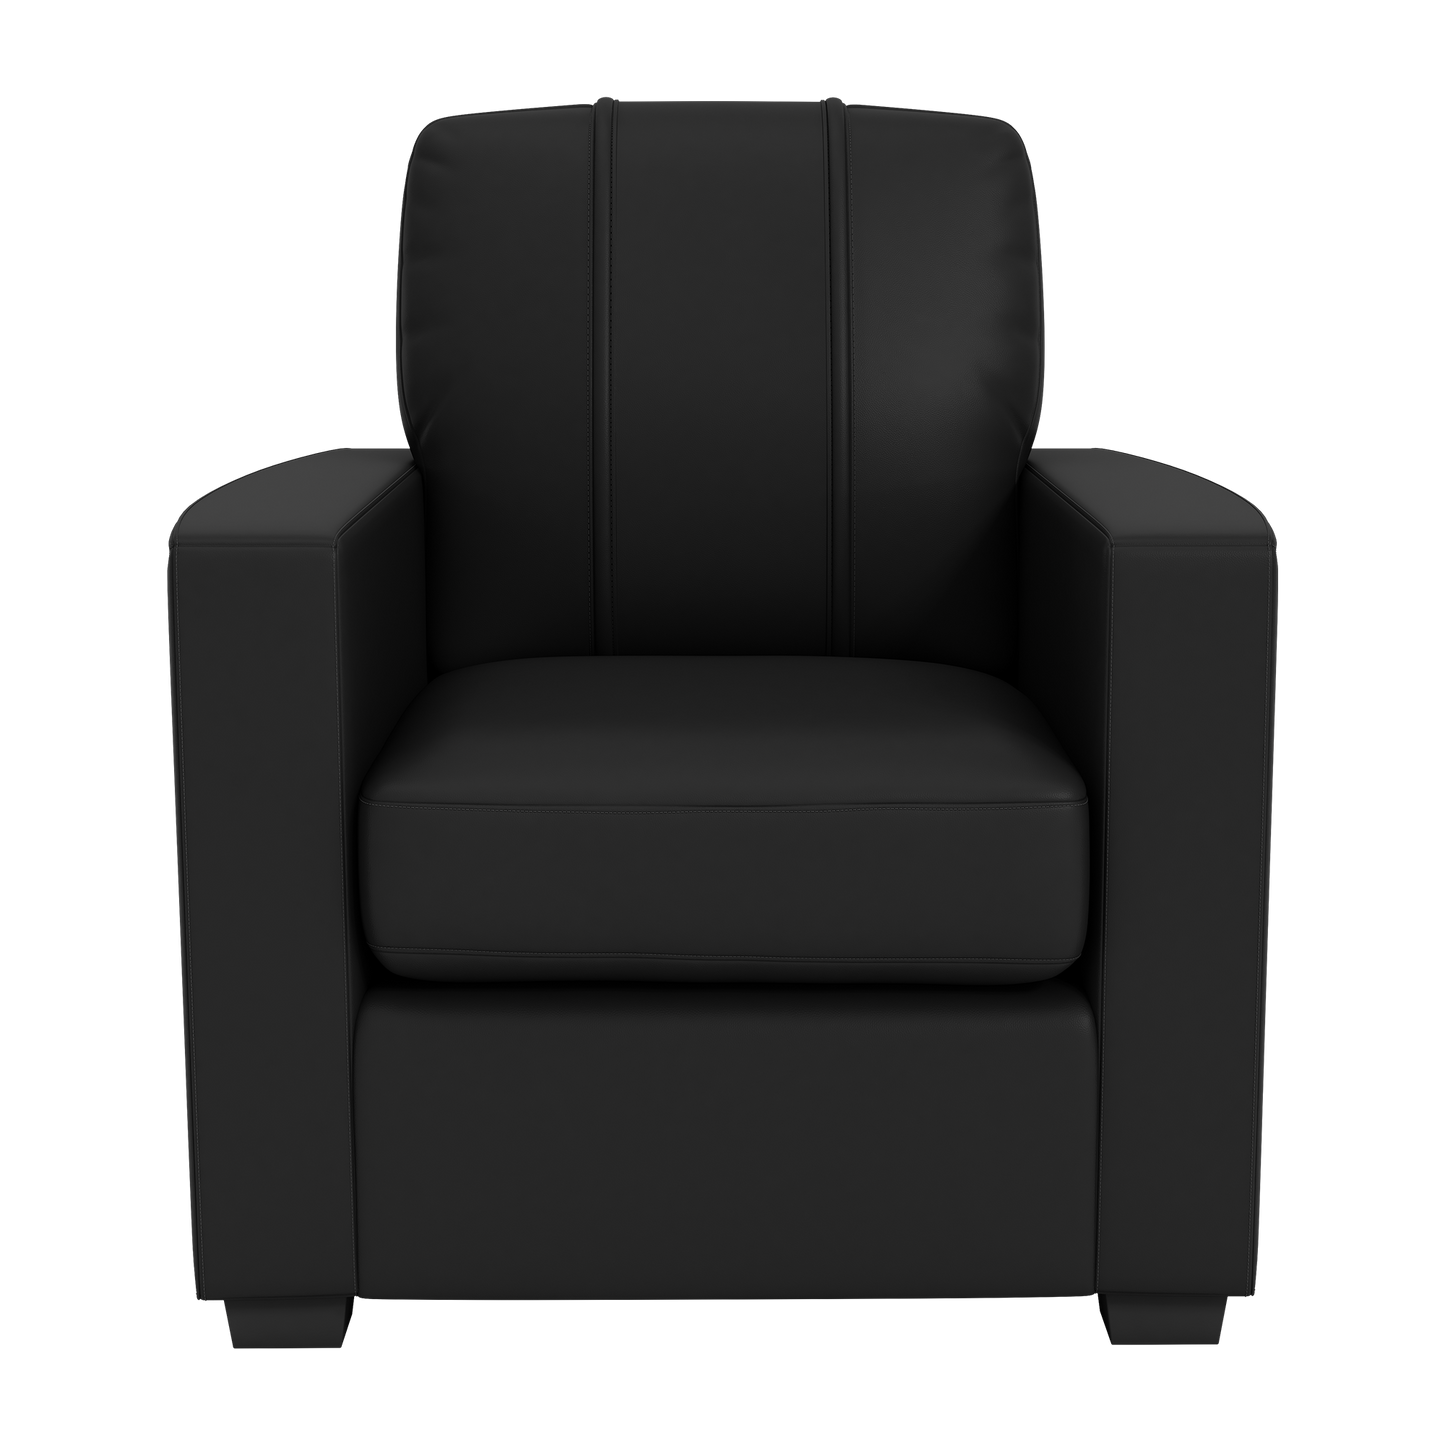 Silver Club Chair with Nashville SC Logo